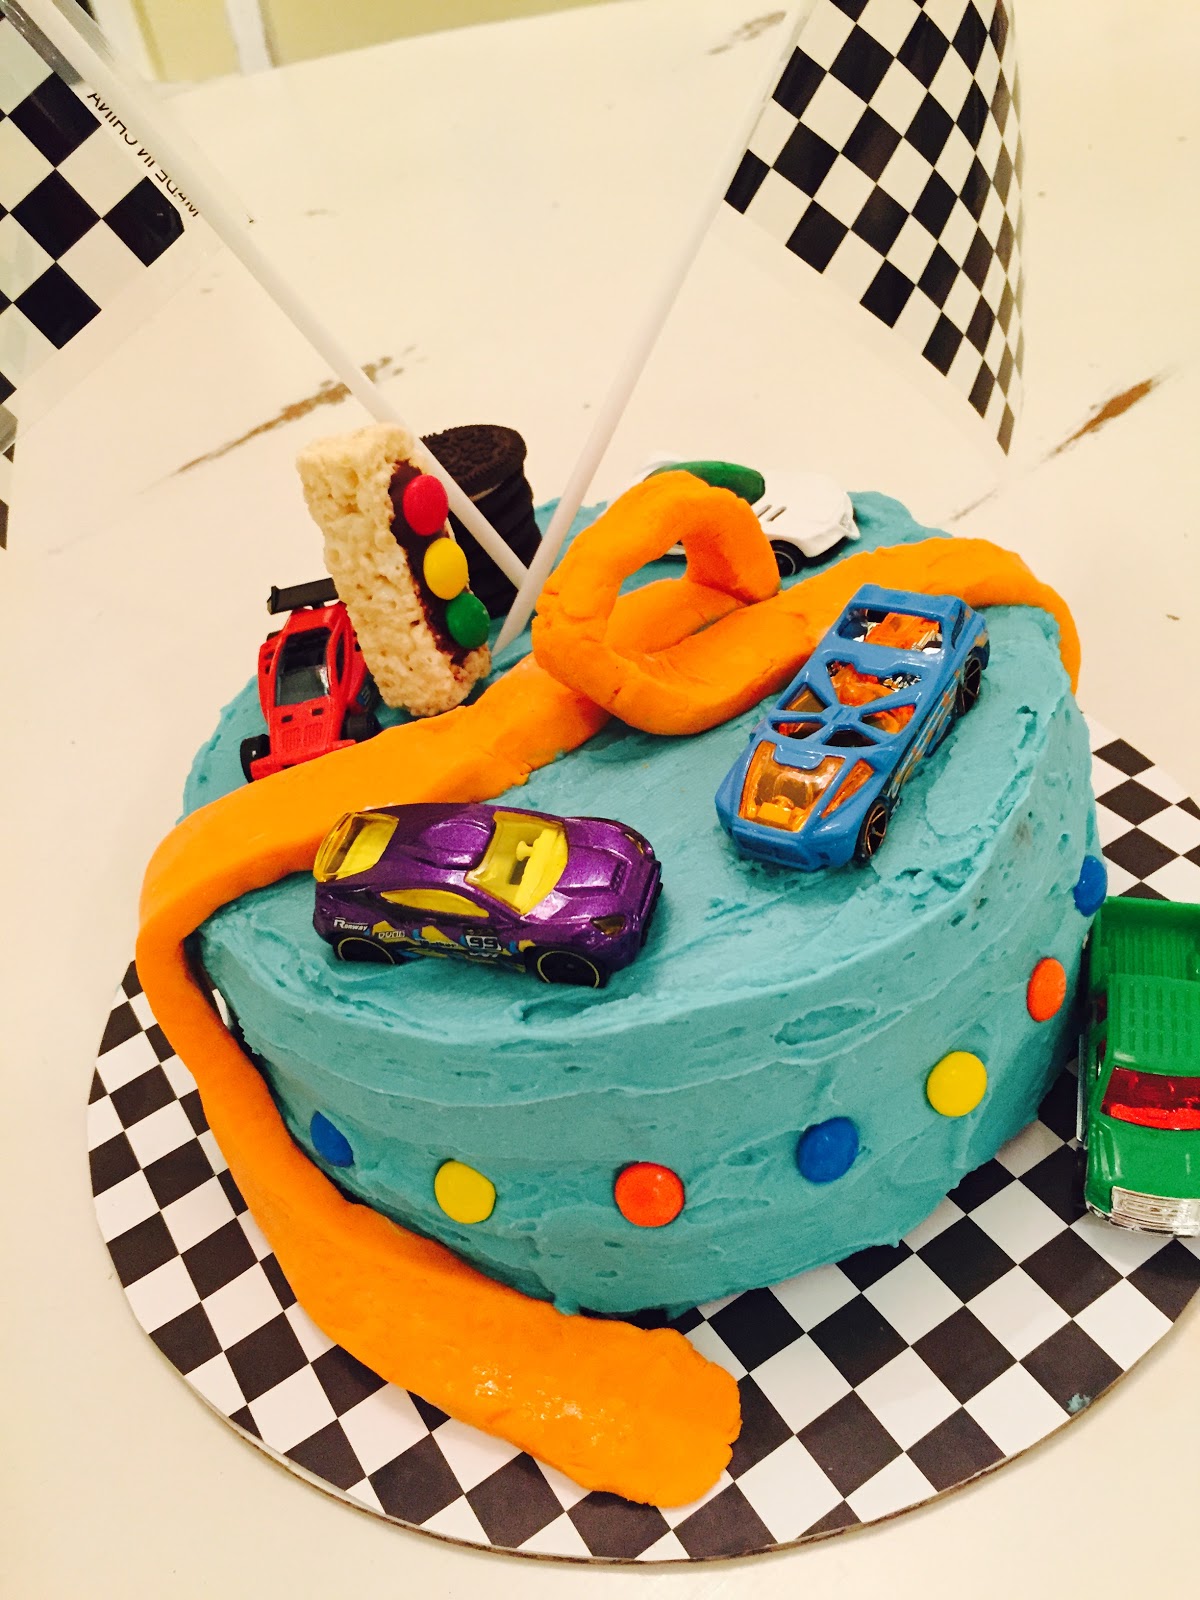 Hot wheels race track cake, The Style Sisters, Hot Wheels car cake